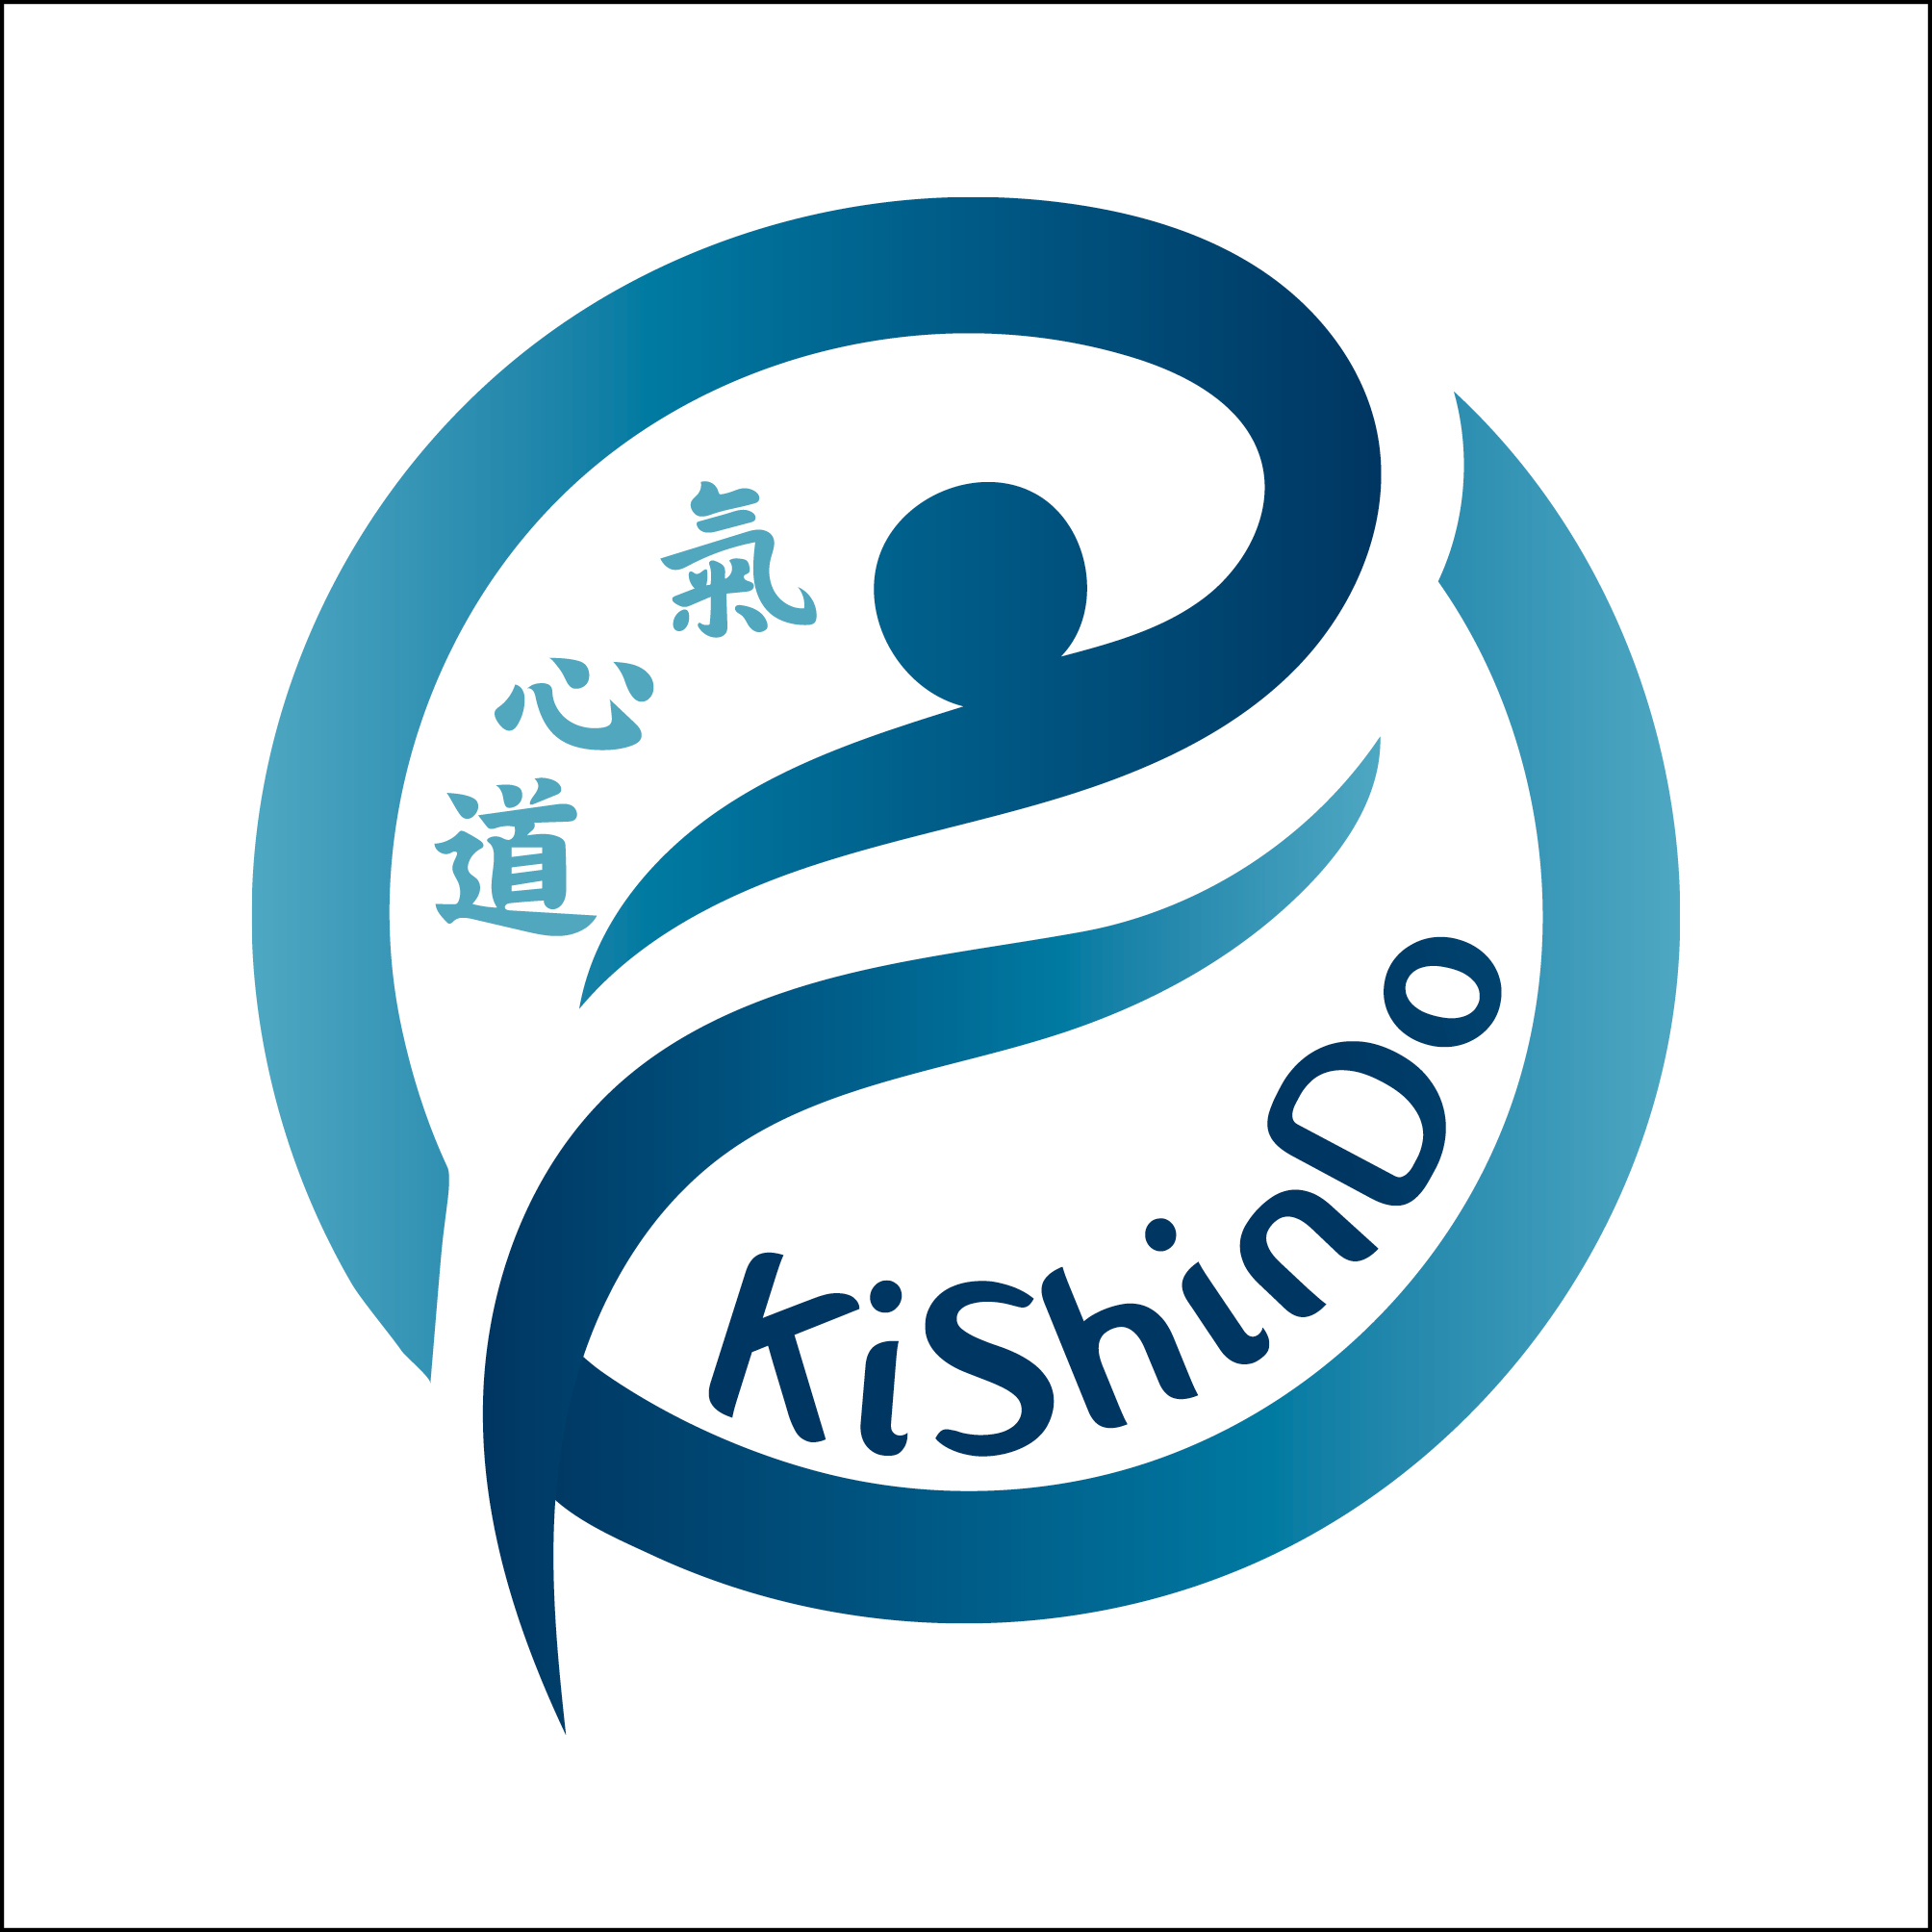 Fédération de Kishindo - Logo